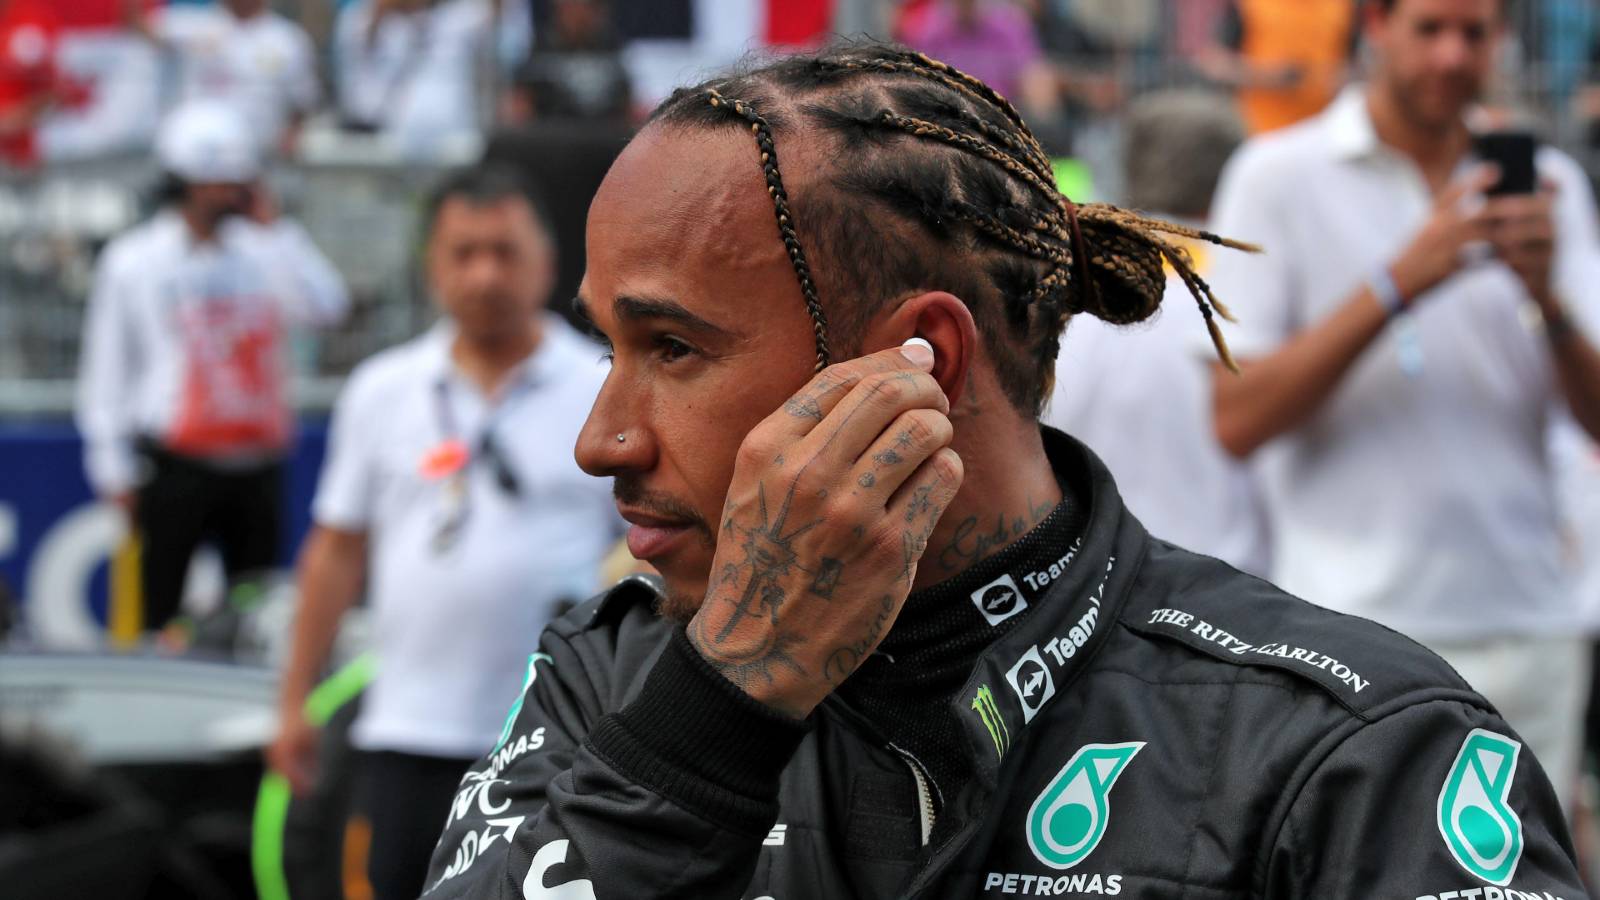 Lewis Hamilton fitting his earplugs. Miami May 2022.